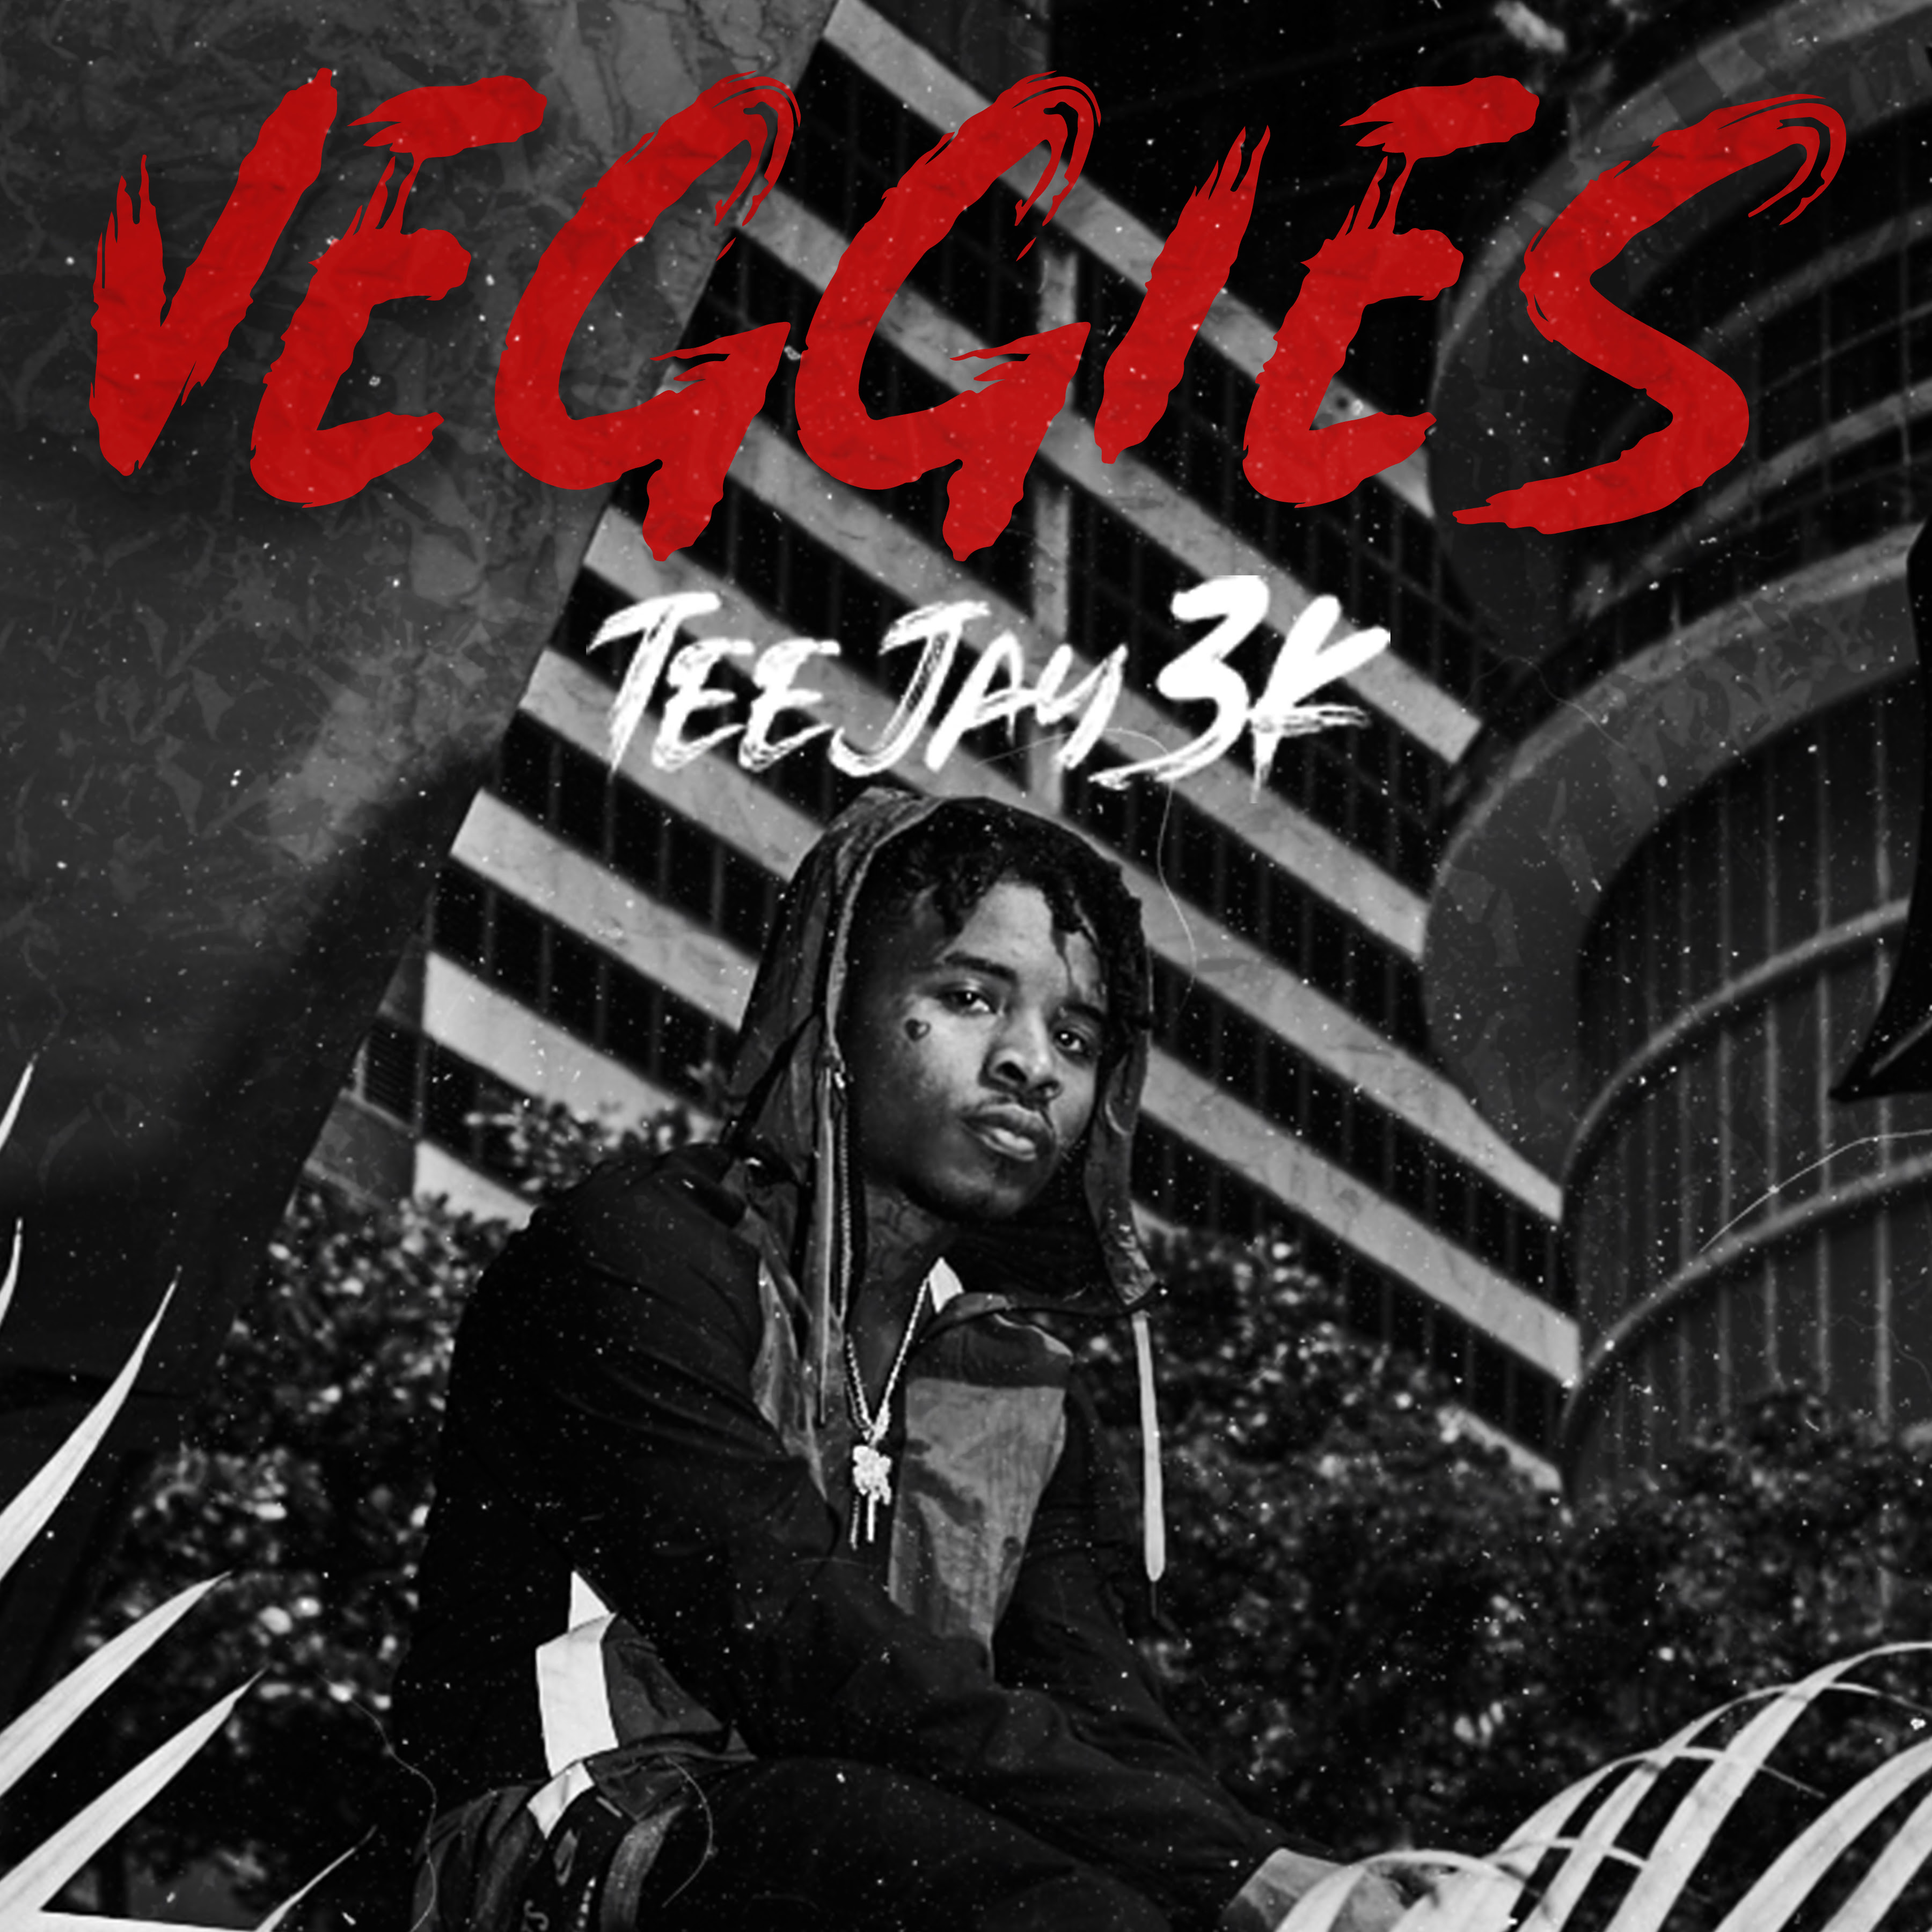 TeeJay3K - Veggies.jpg